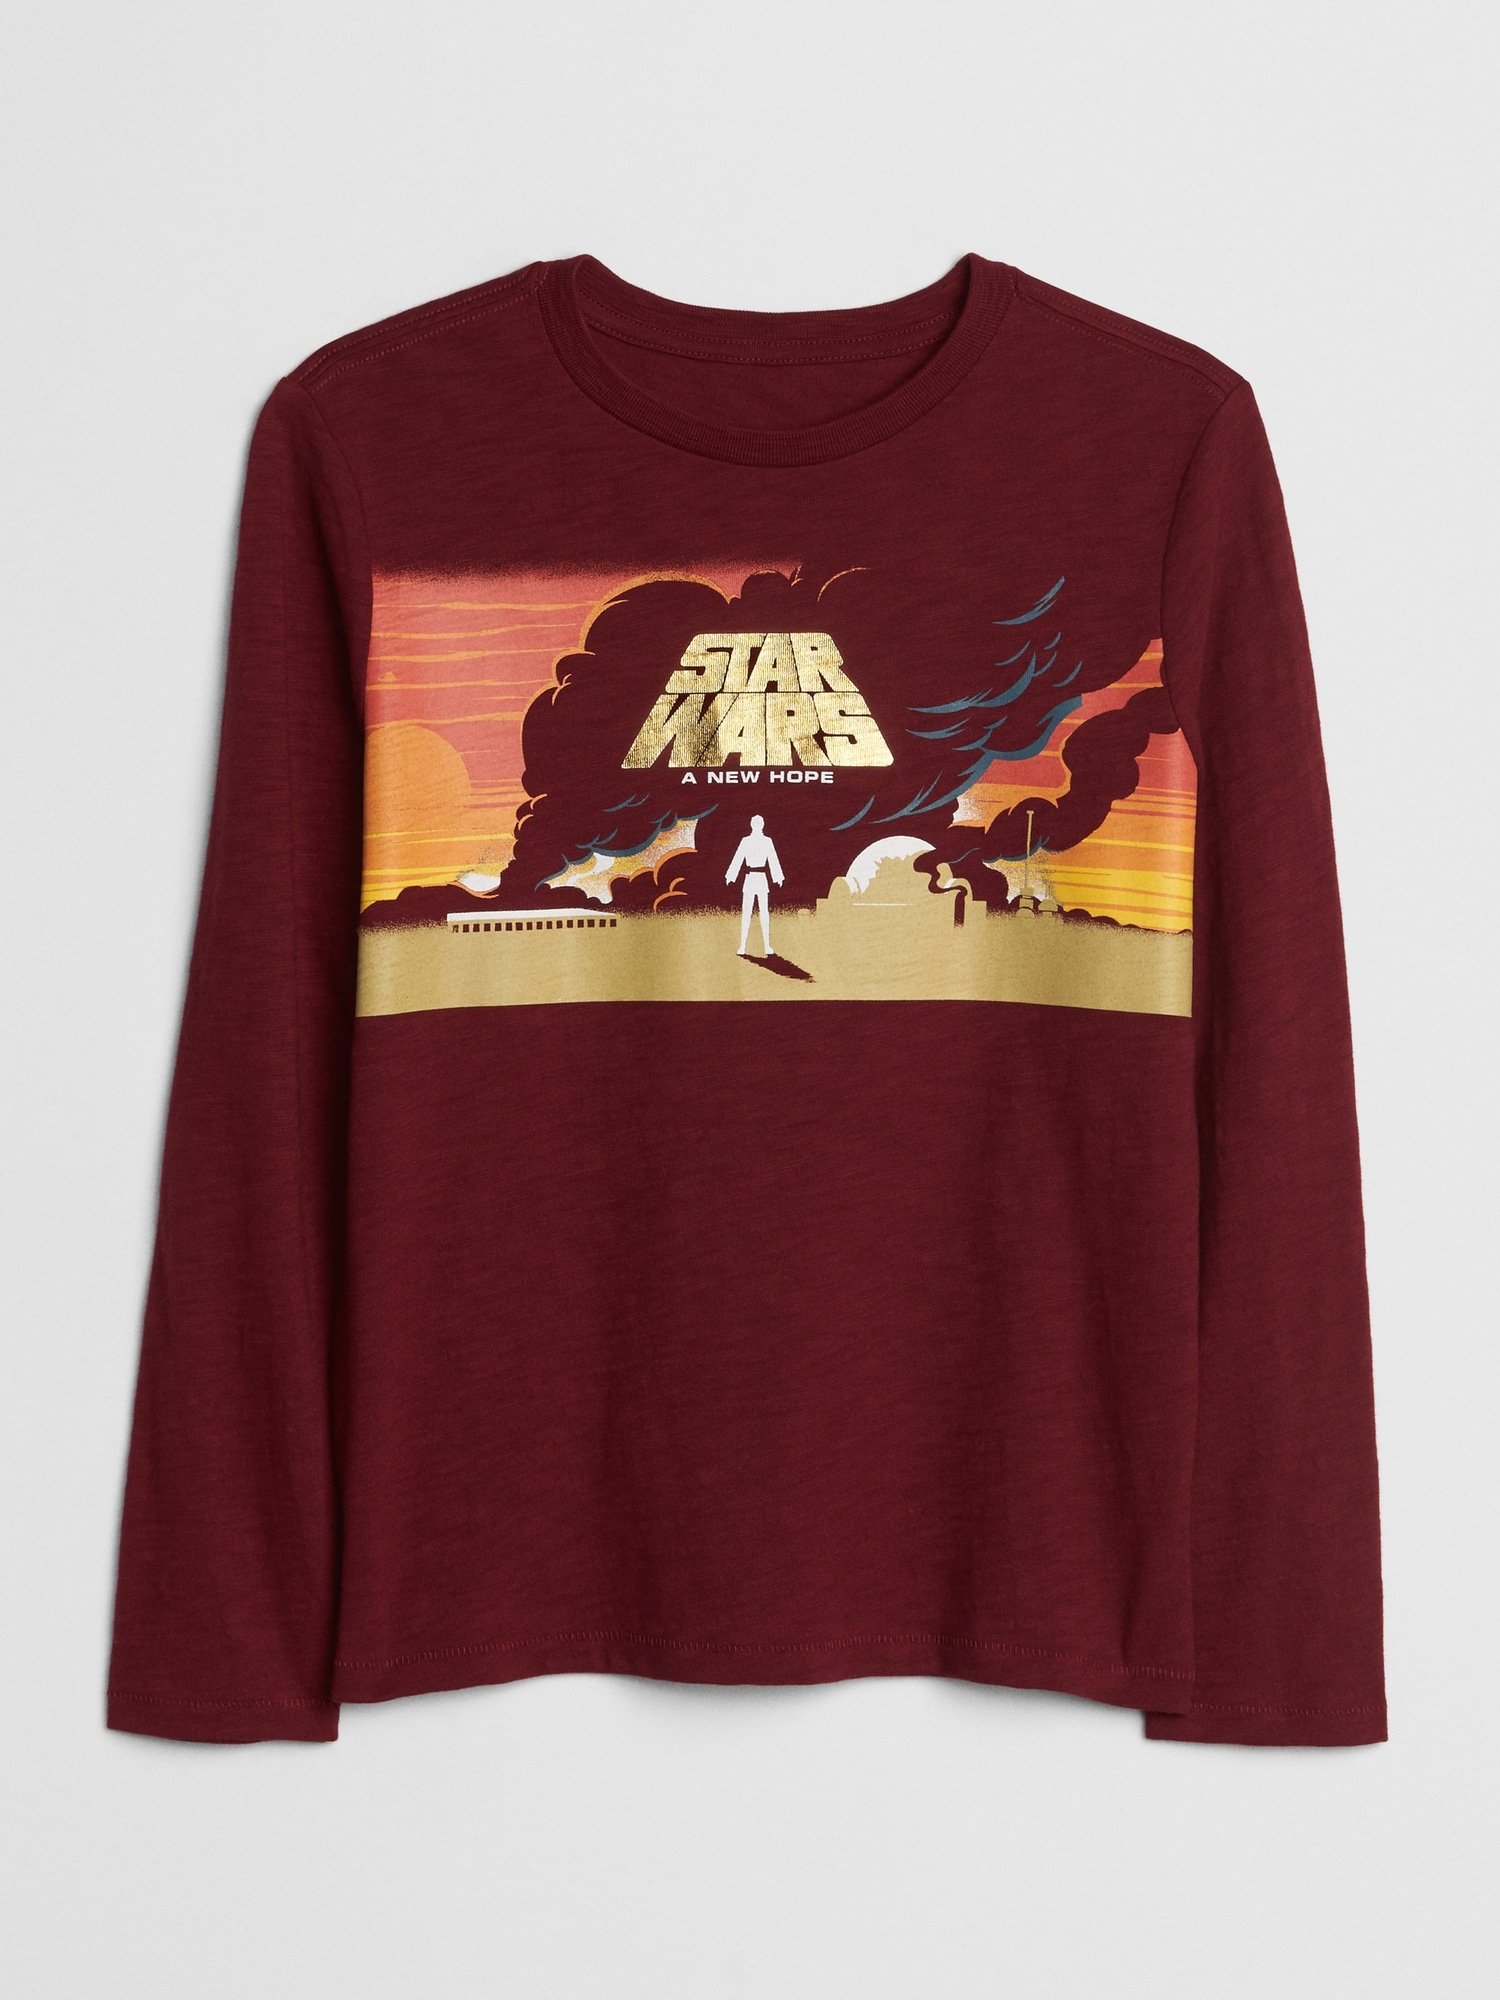 Star Wars™ T-Shirt product image